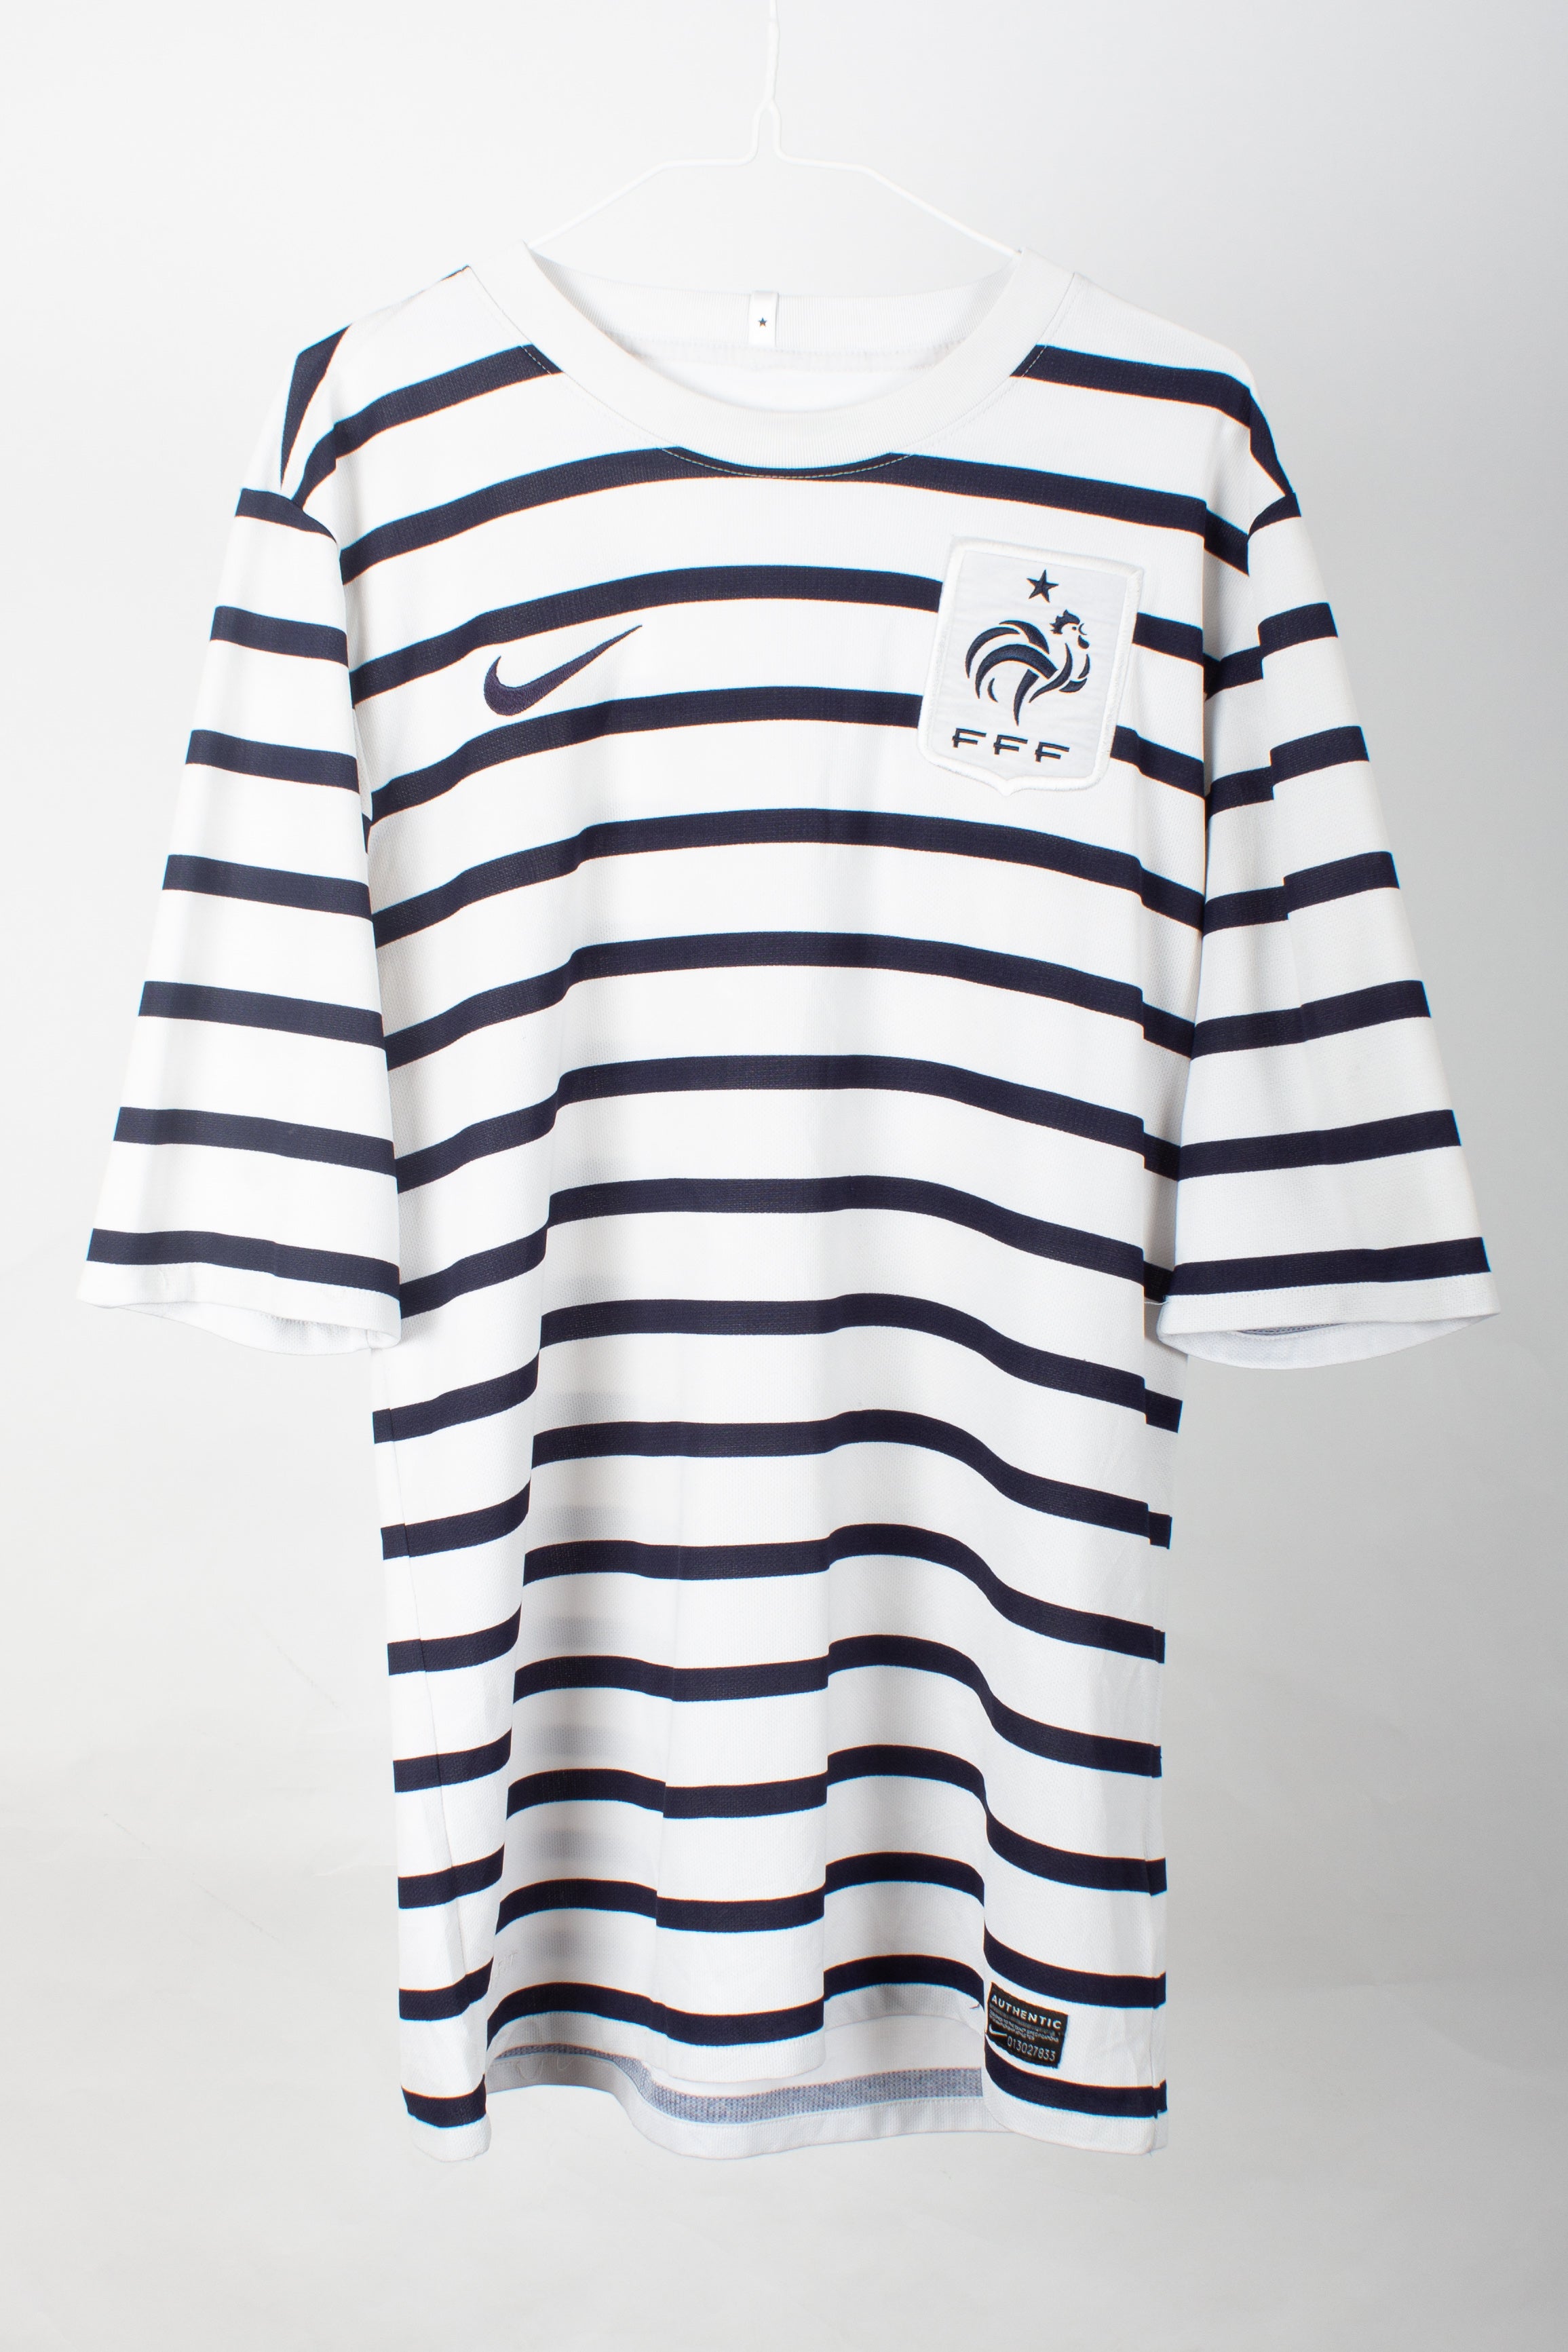 France 2011 Away Shirt (M)